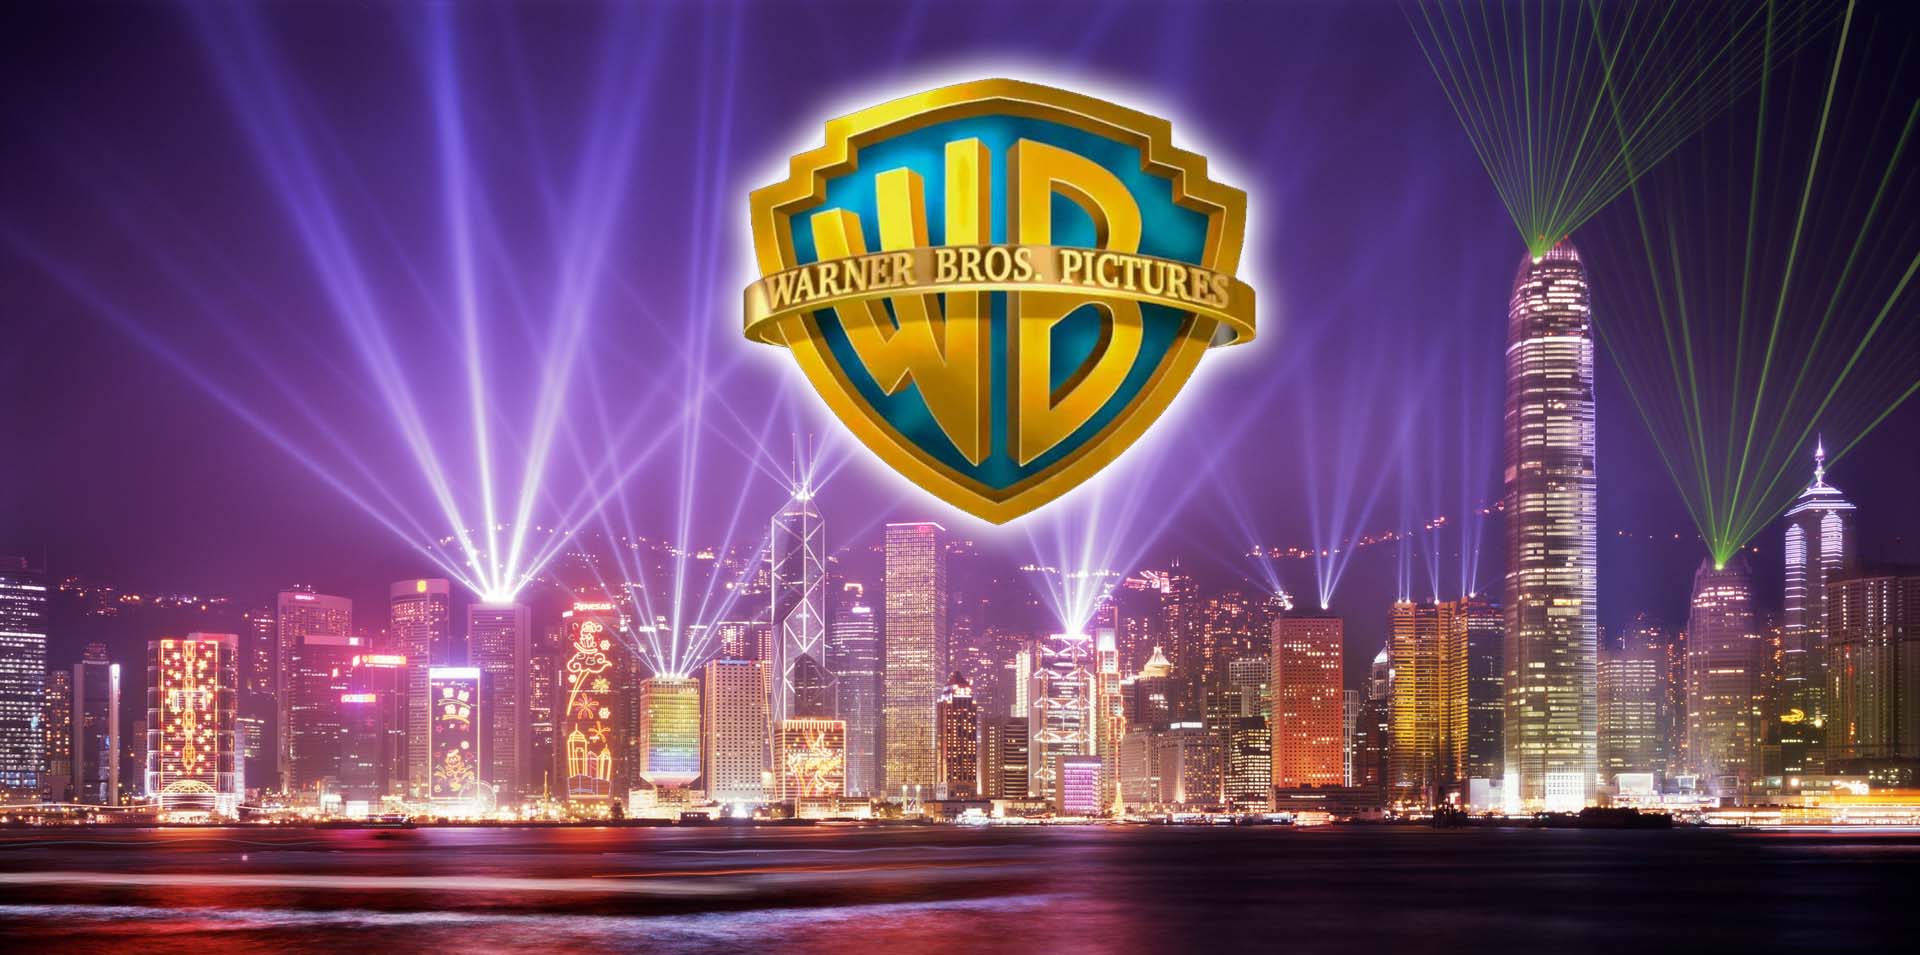 China Media Capital (CMC) and Warner Bros. Entertainment